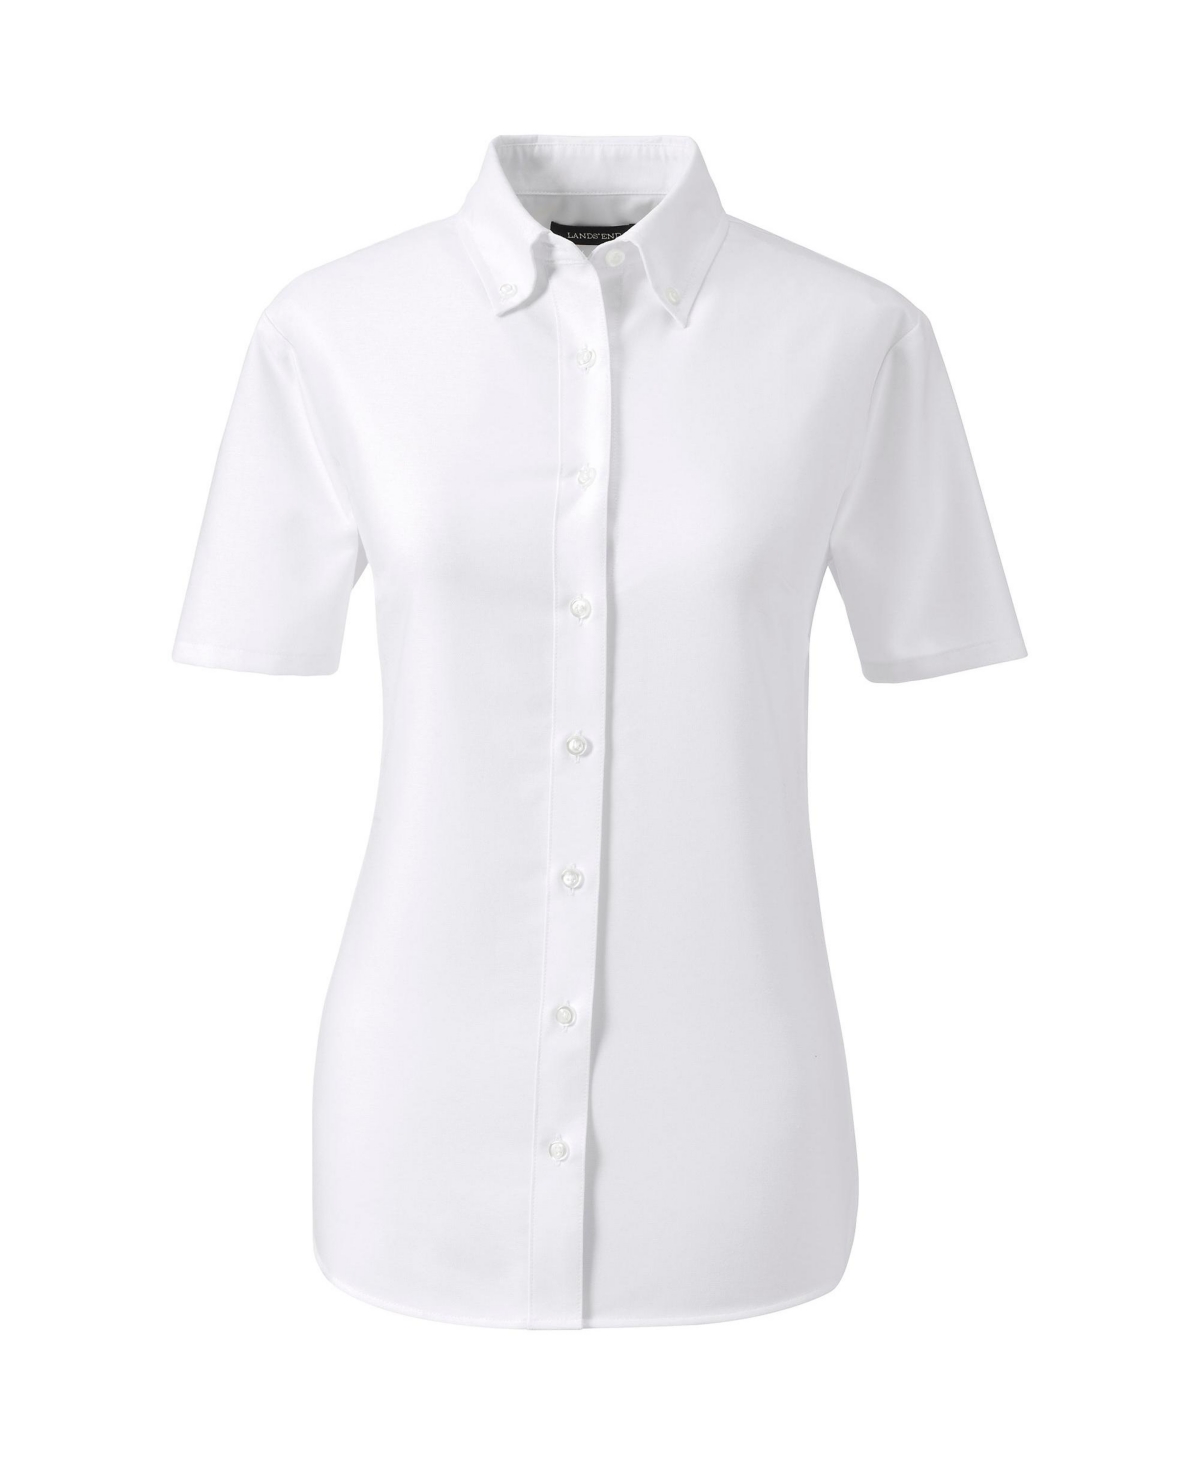 Women's School Uniform Short Sleeve Oxford Dress Shirt - French blue